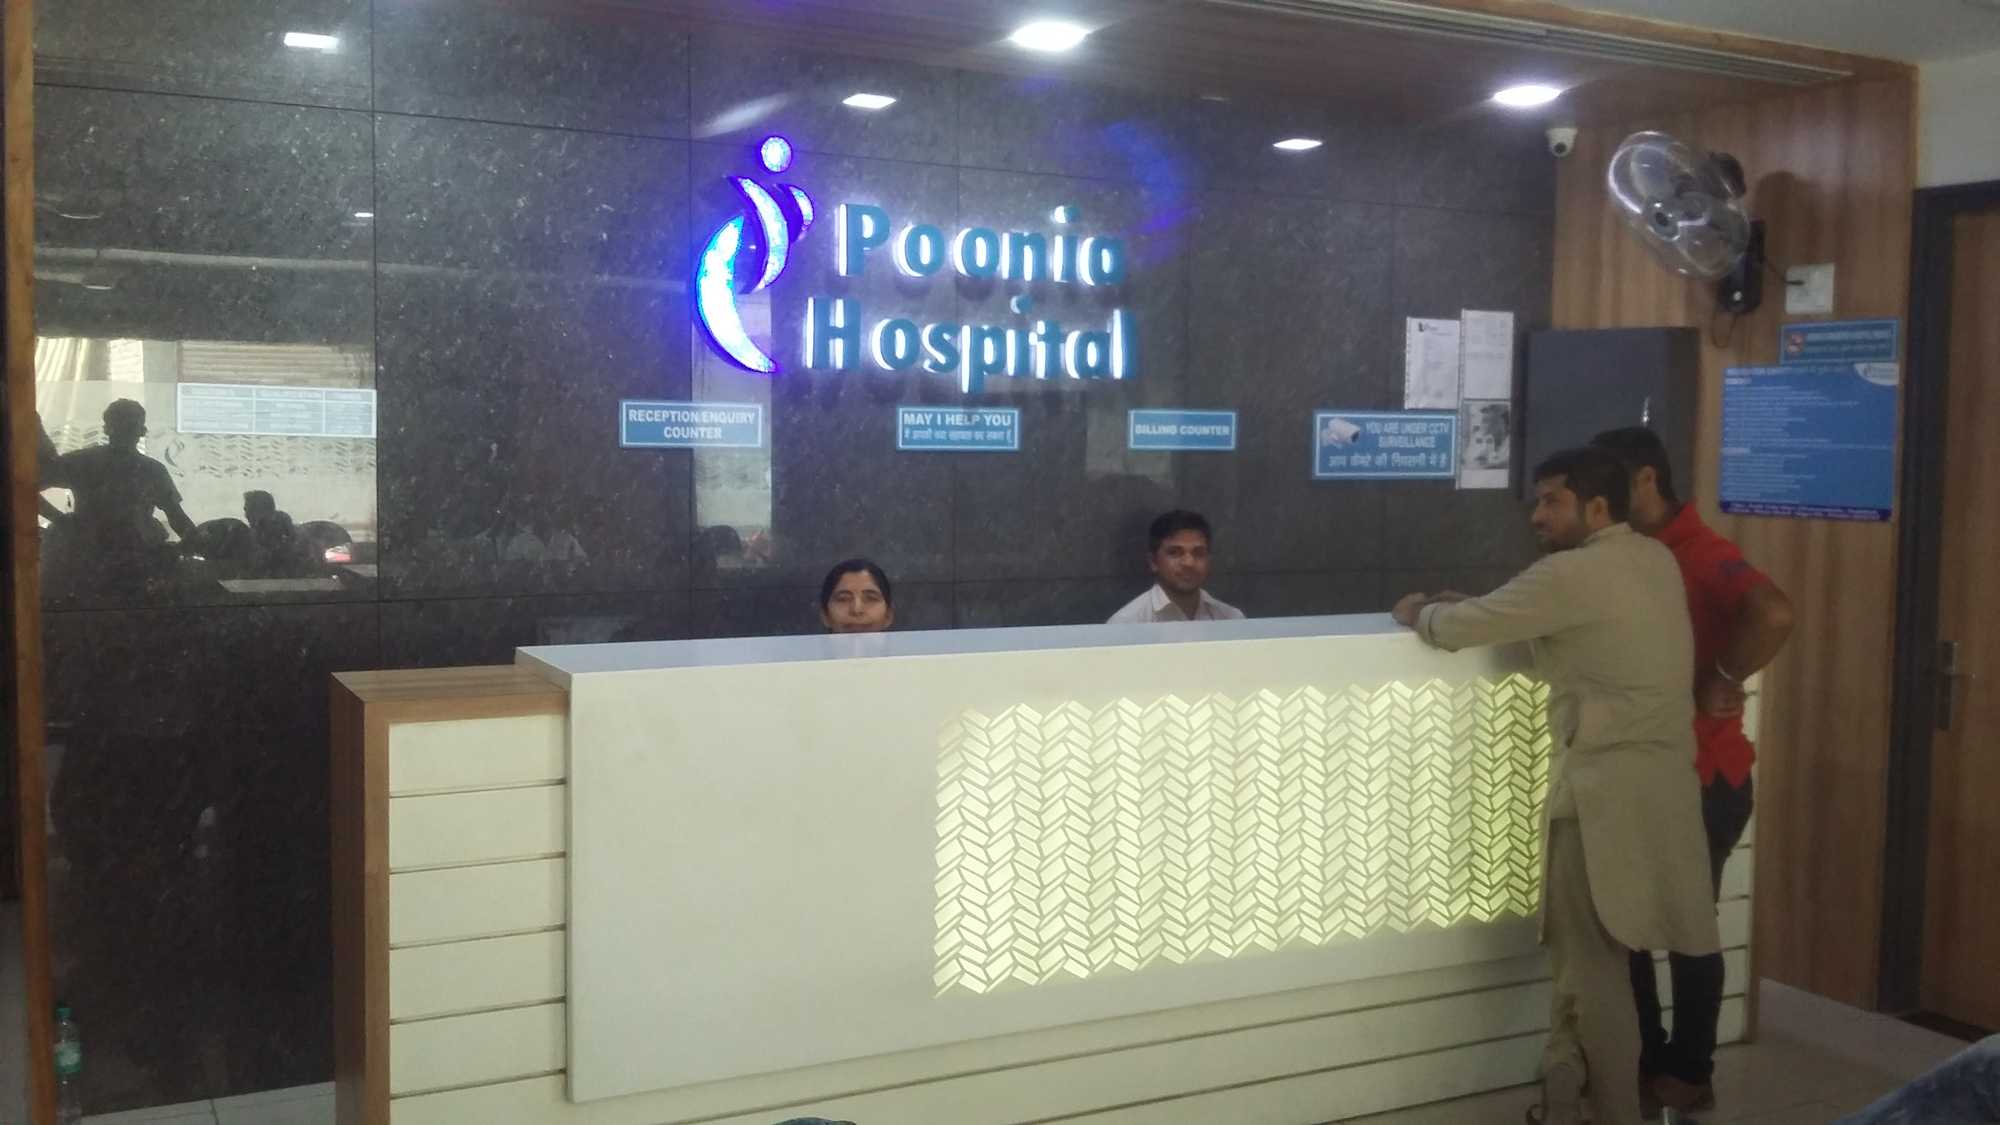 Poonia Hospital|Hospitals|Medical Services